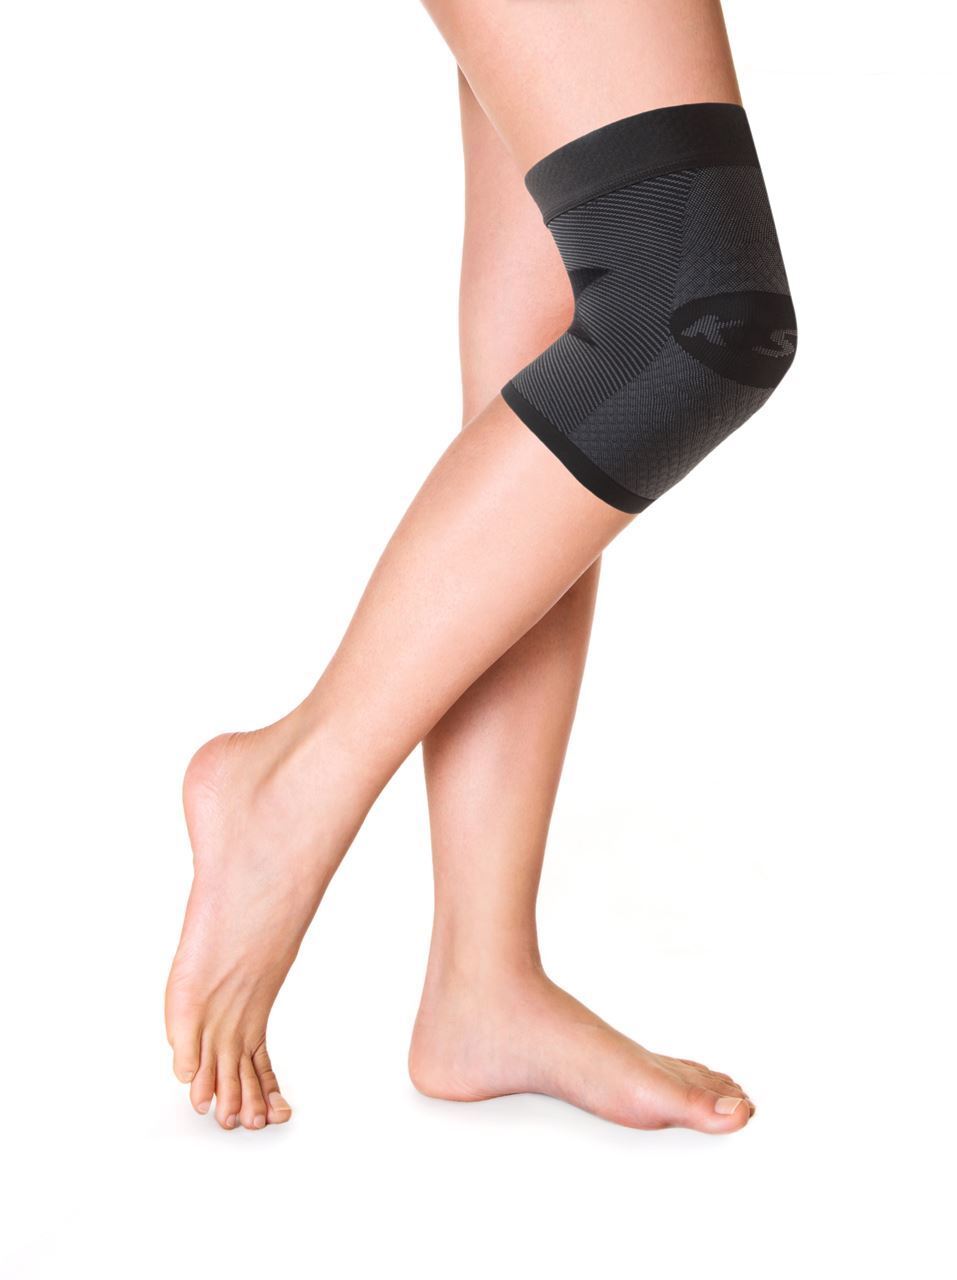 https://www.homehealthcareshoppe.com/images/thumbs/0008002_os1st-knee-compression-sleeve-the-ks7.jpeg